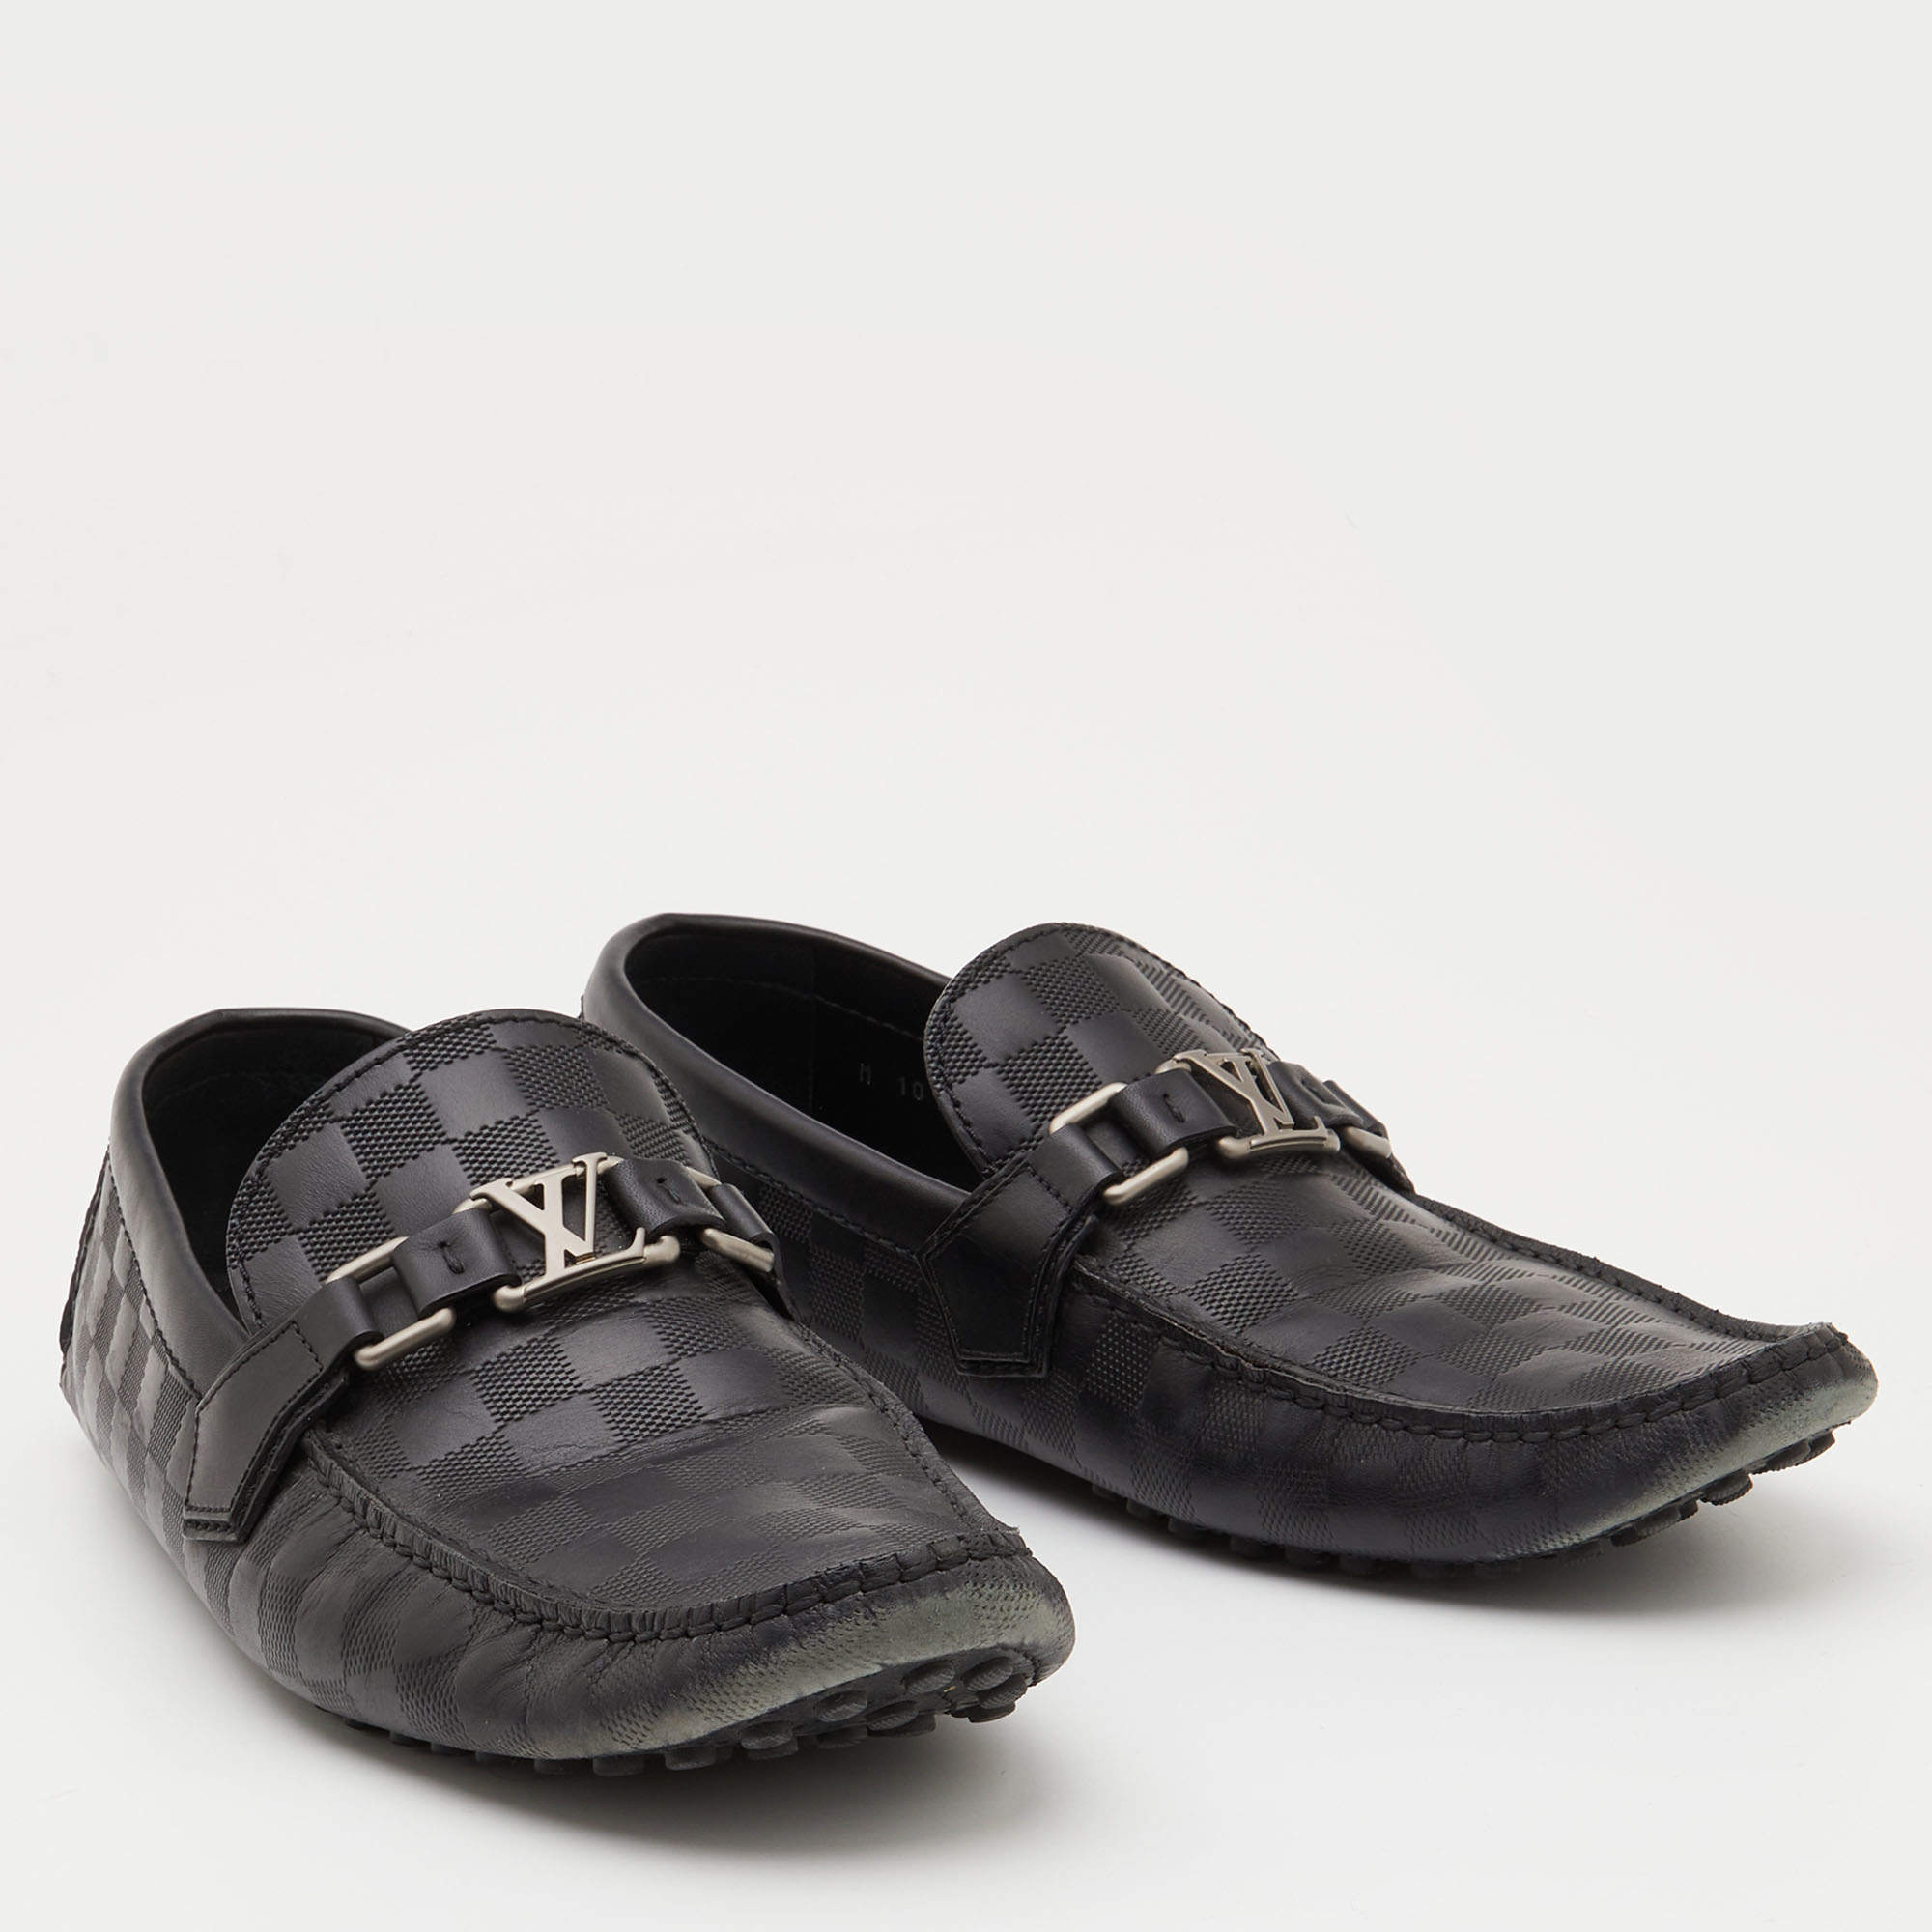 Louis Vuitton Hockenheim Moccasin BLACK. Size 10.0